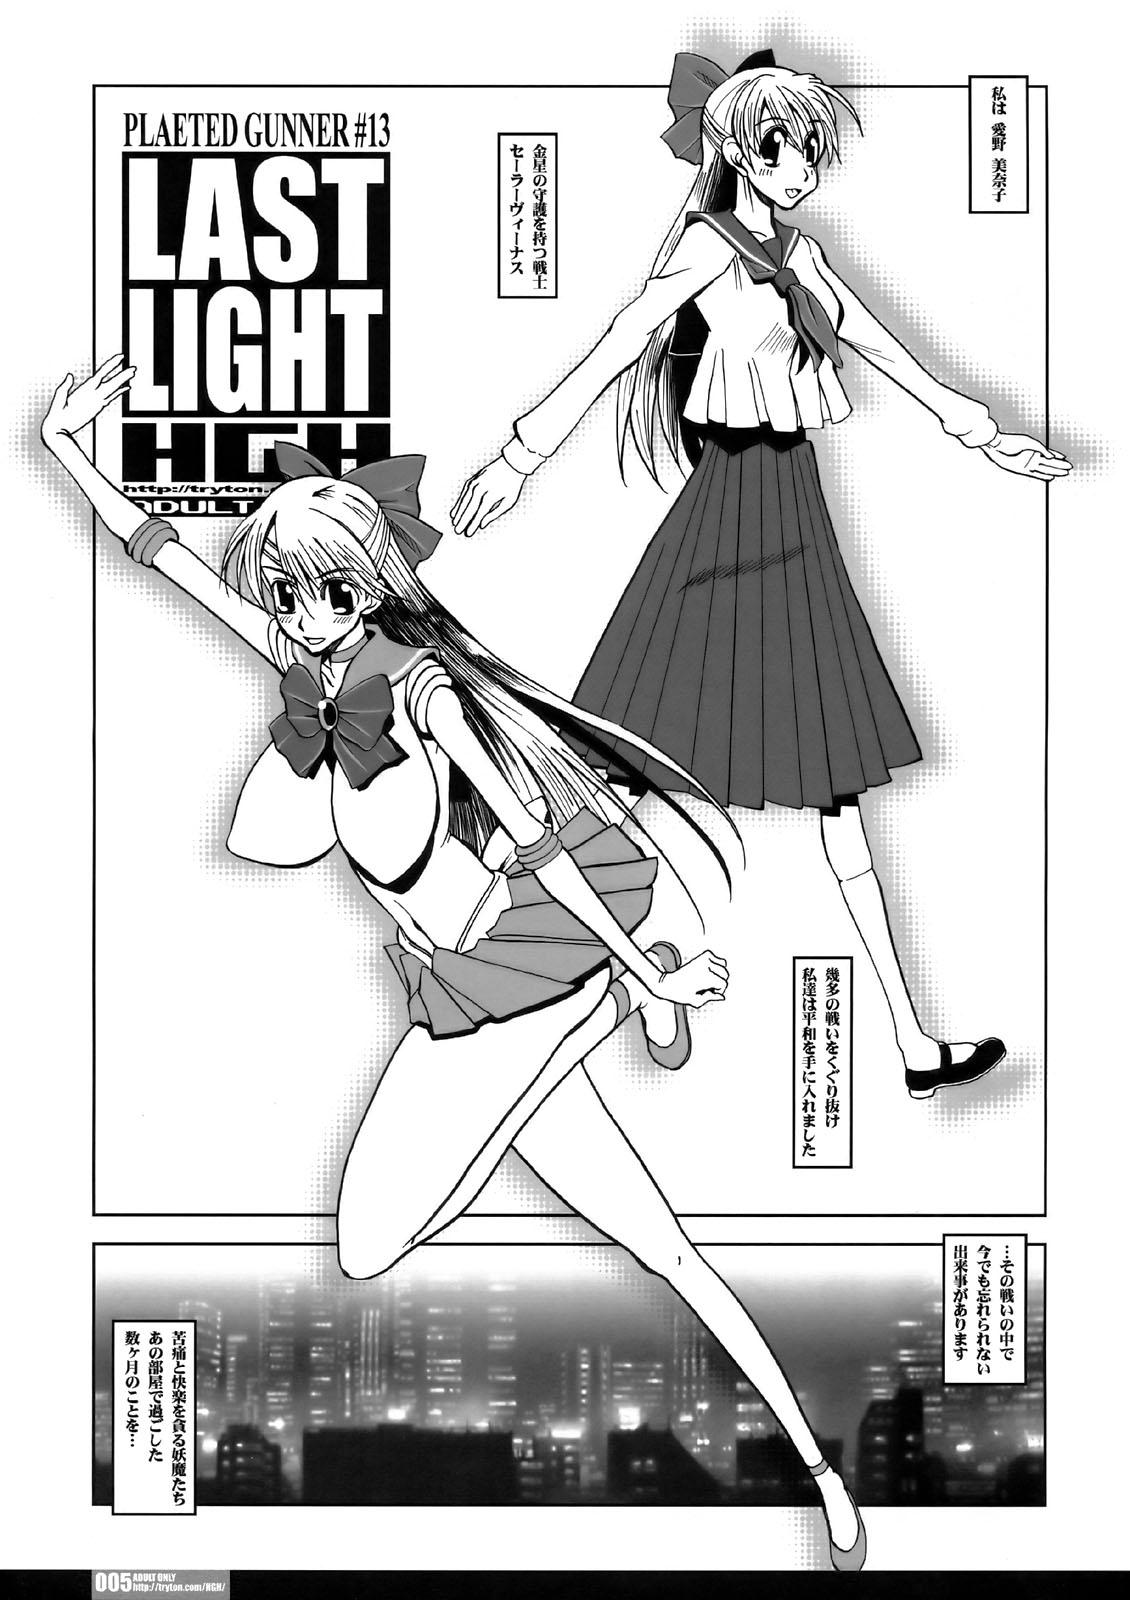 Real Orgasms HGH - Last Light - Sailor moon Corno - Page 5